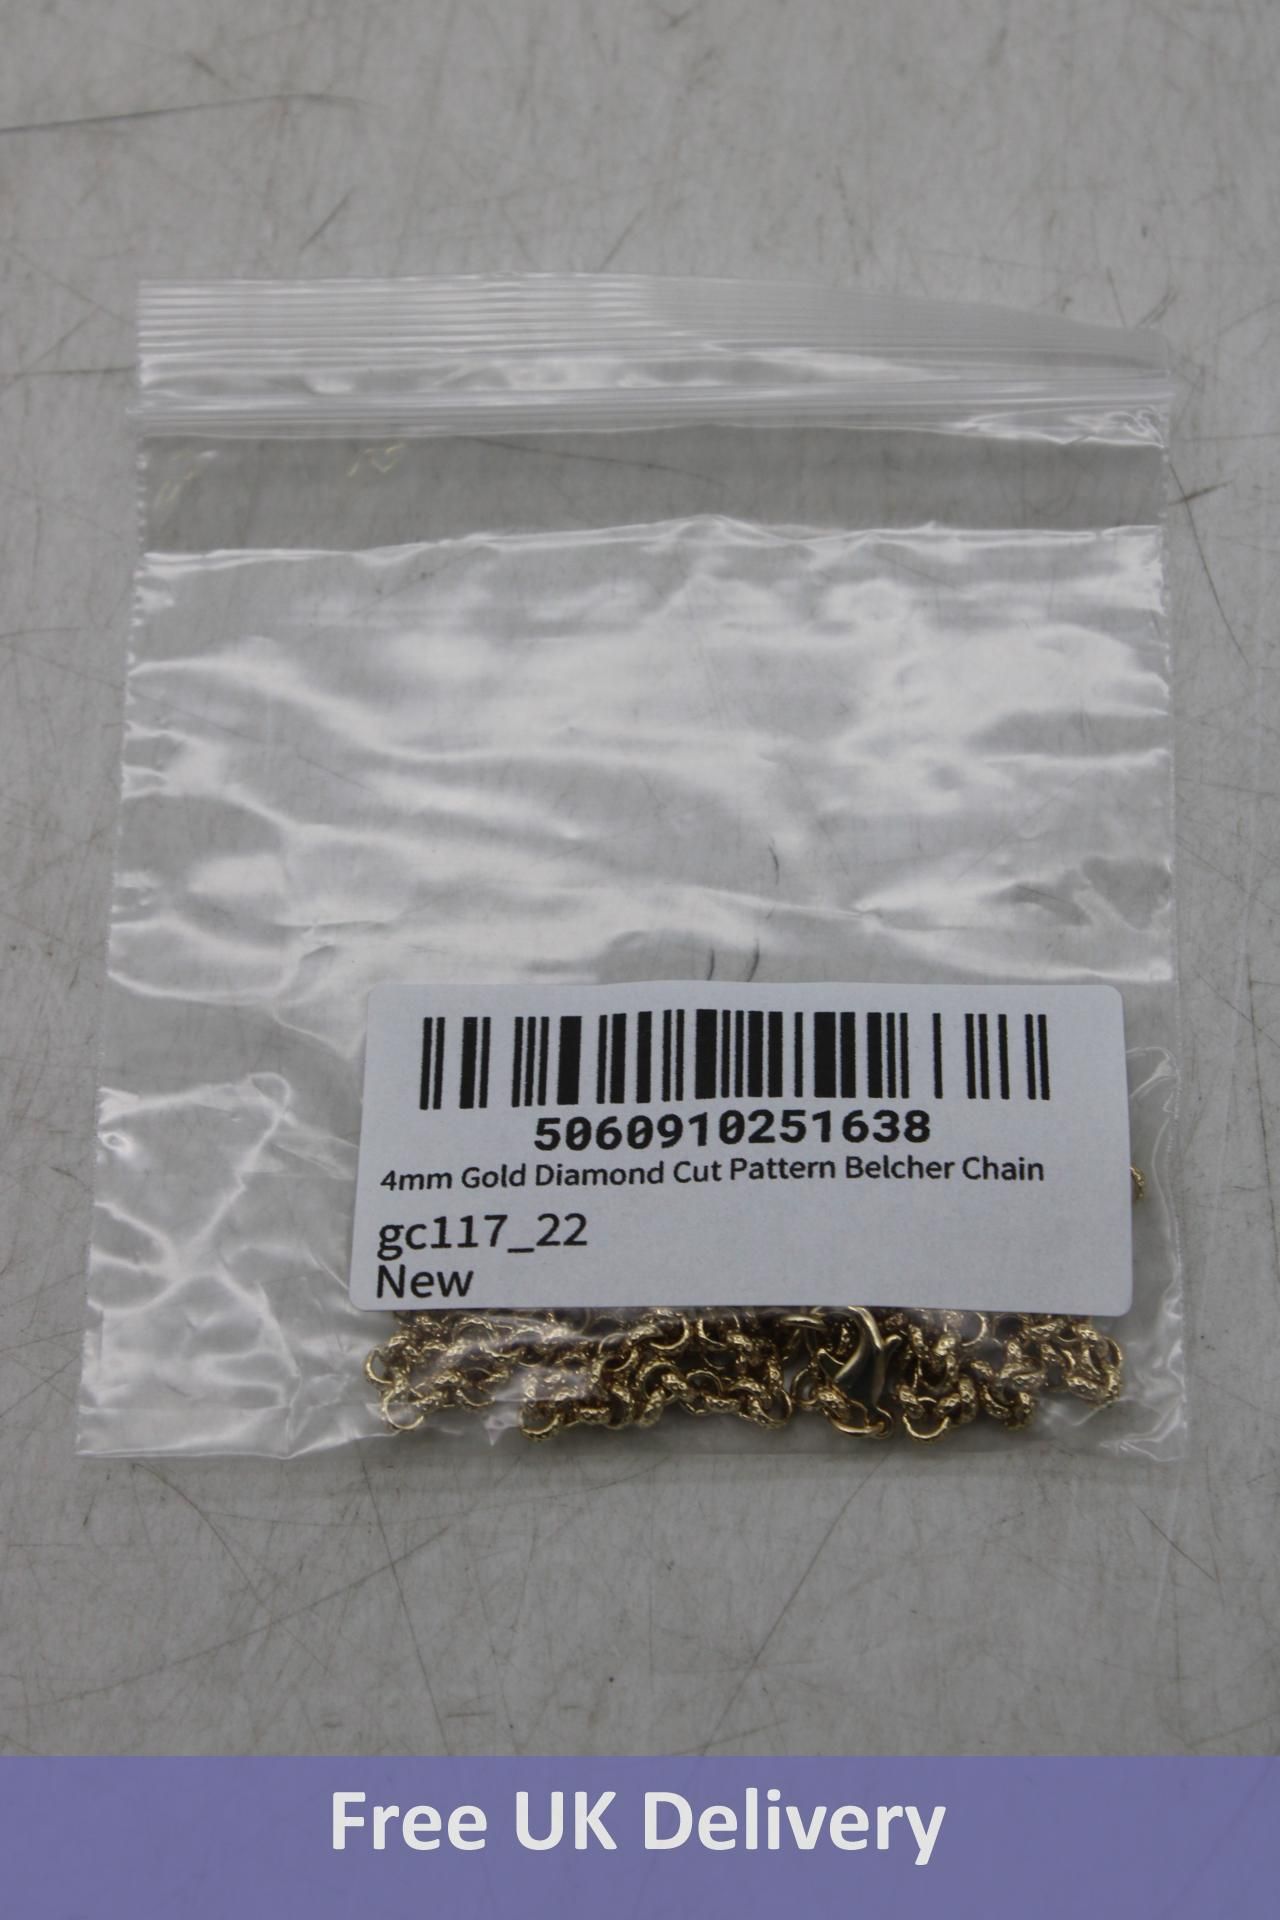 Three Unisex Diamond Cut Pattern Belcher Chains, Gold, 44mm, GC117-22